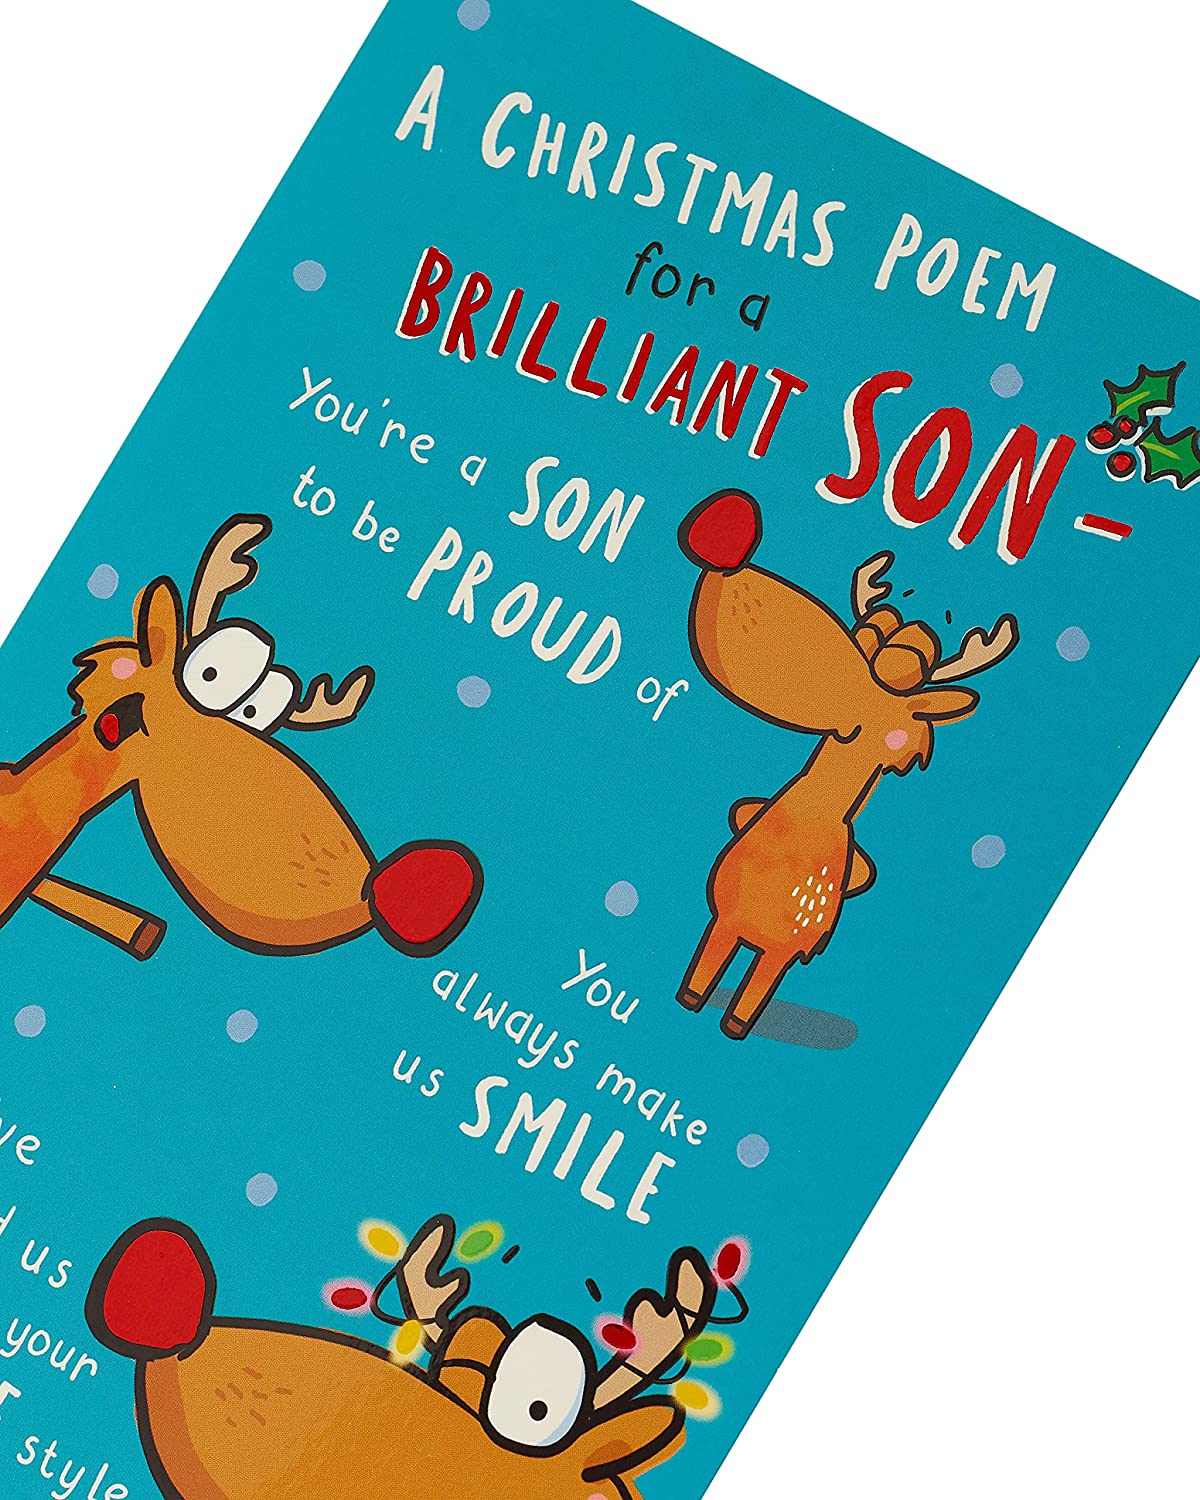 Son Christmas Card Reindeer Funny Verse